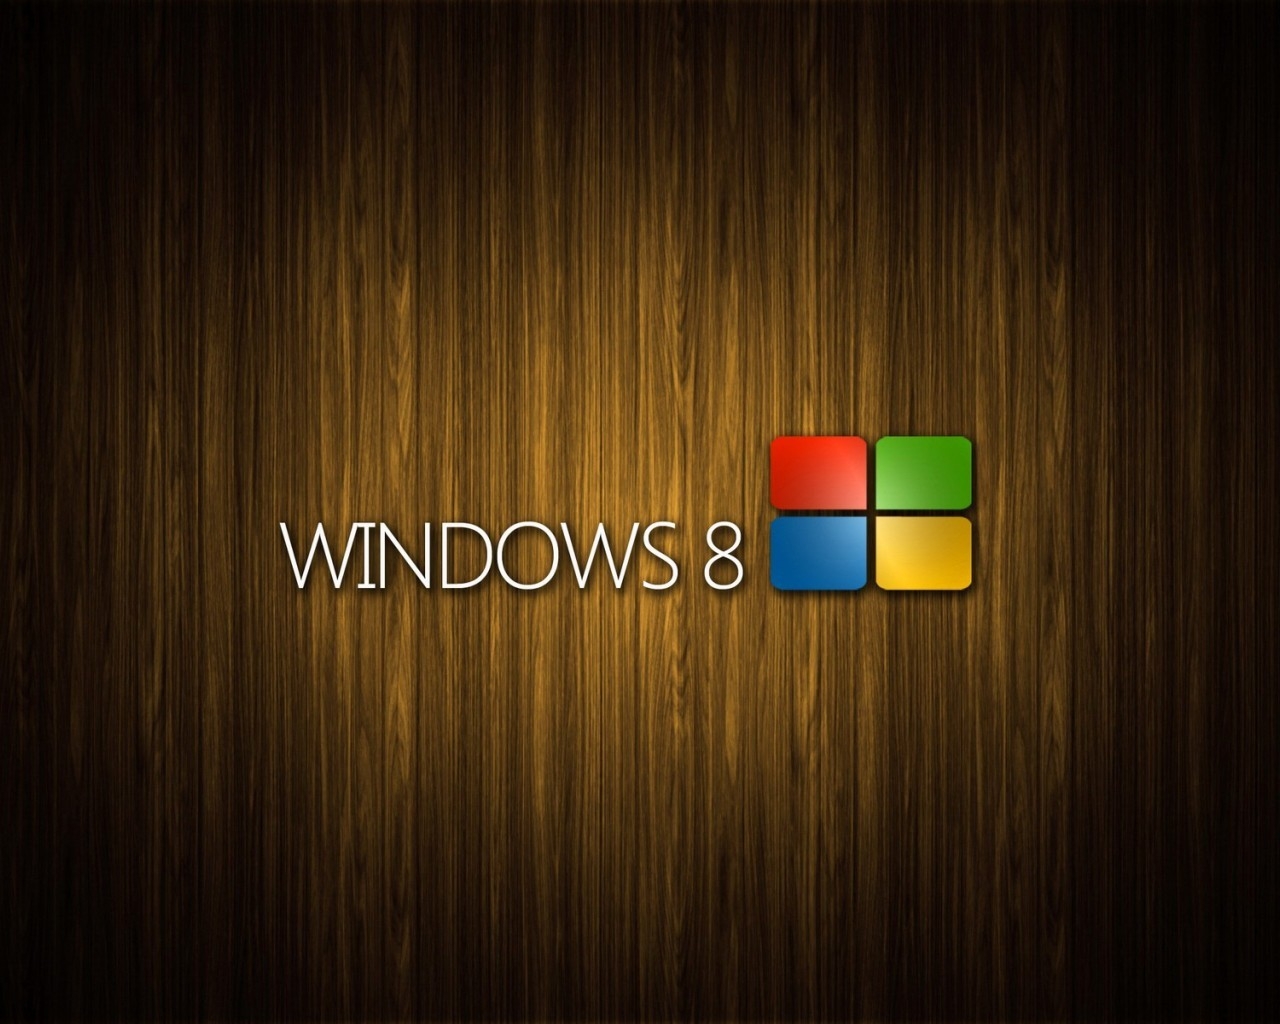 Microsoft Windows 8 Logo 1280 x 1024 Wallpaper